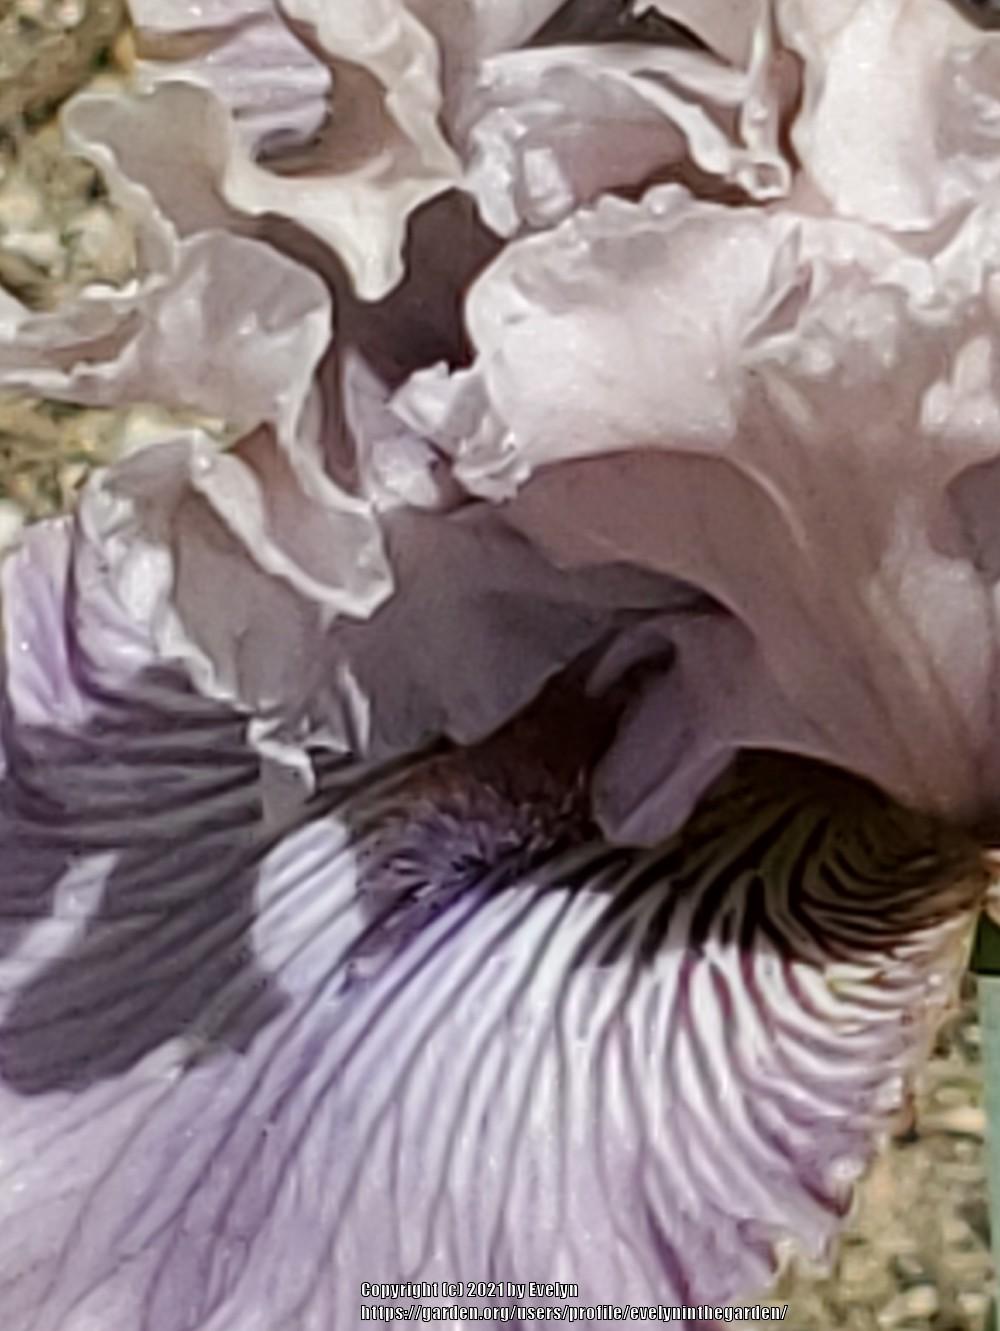 Photo of Tall Bearded Iris (Iris 'Haunted Heart') uploaded by evelyninthegarden